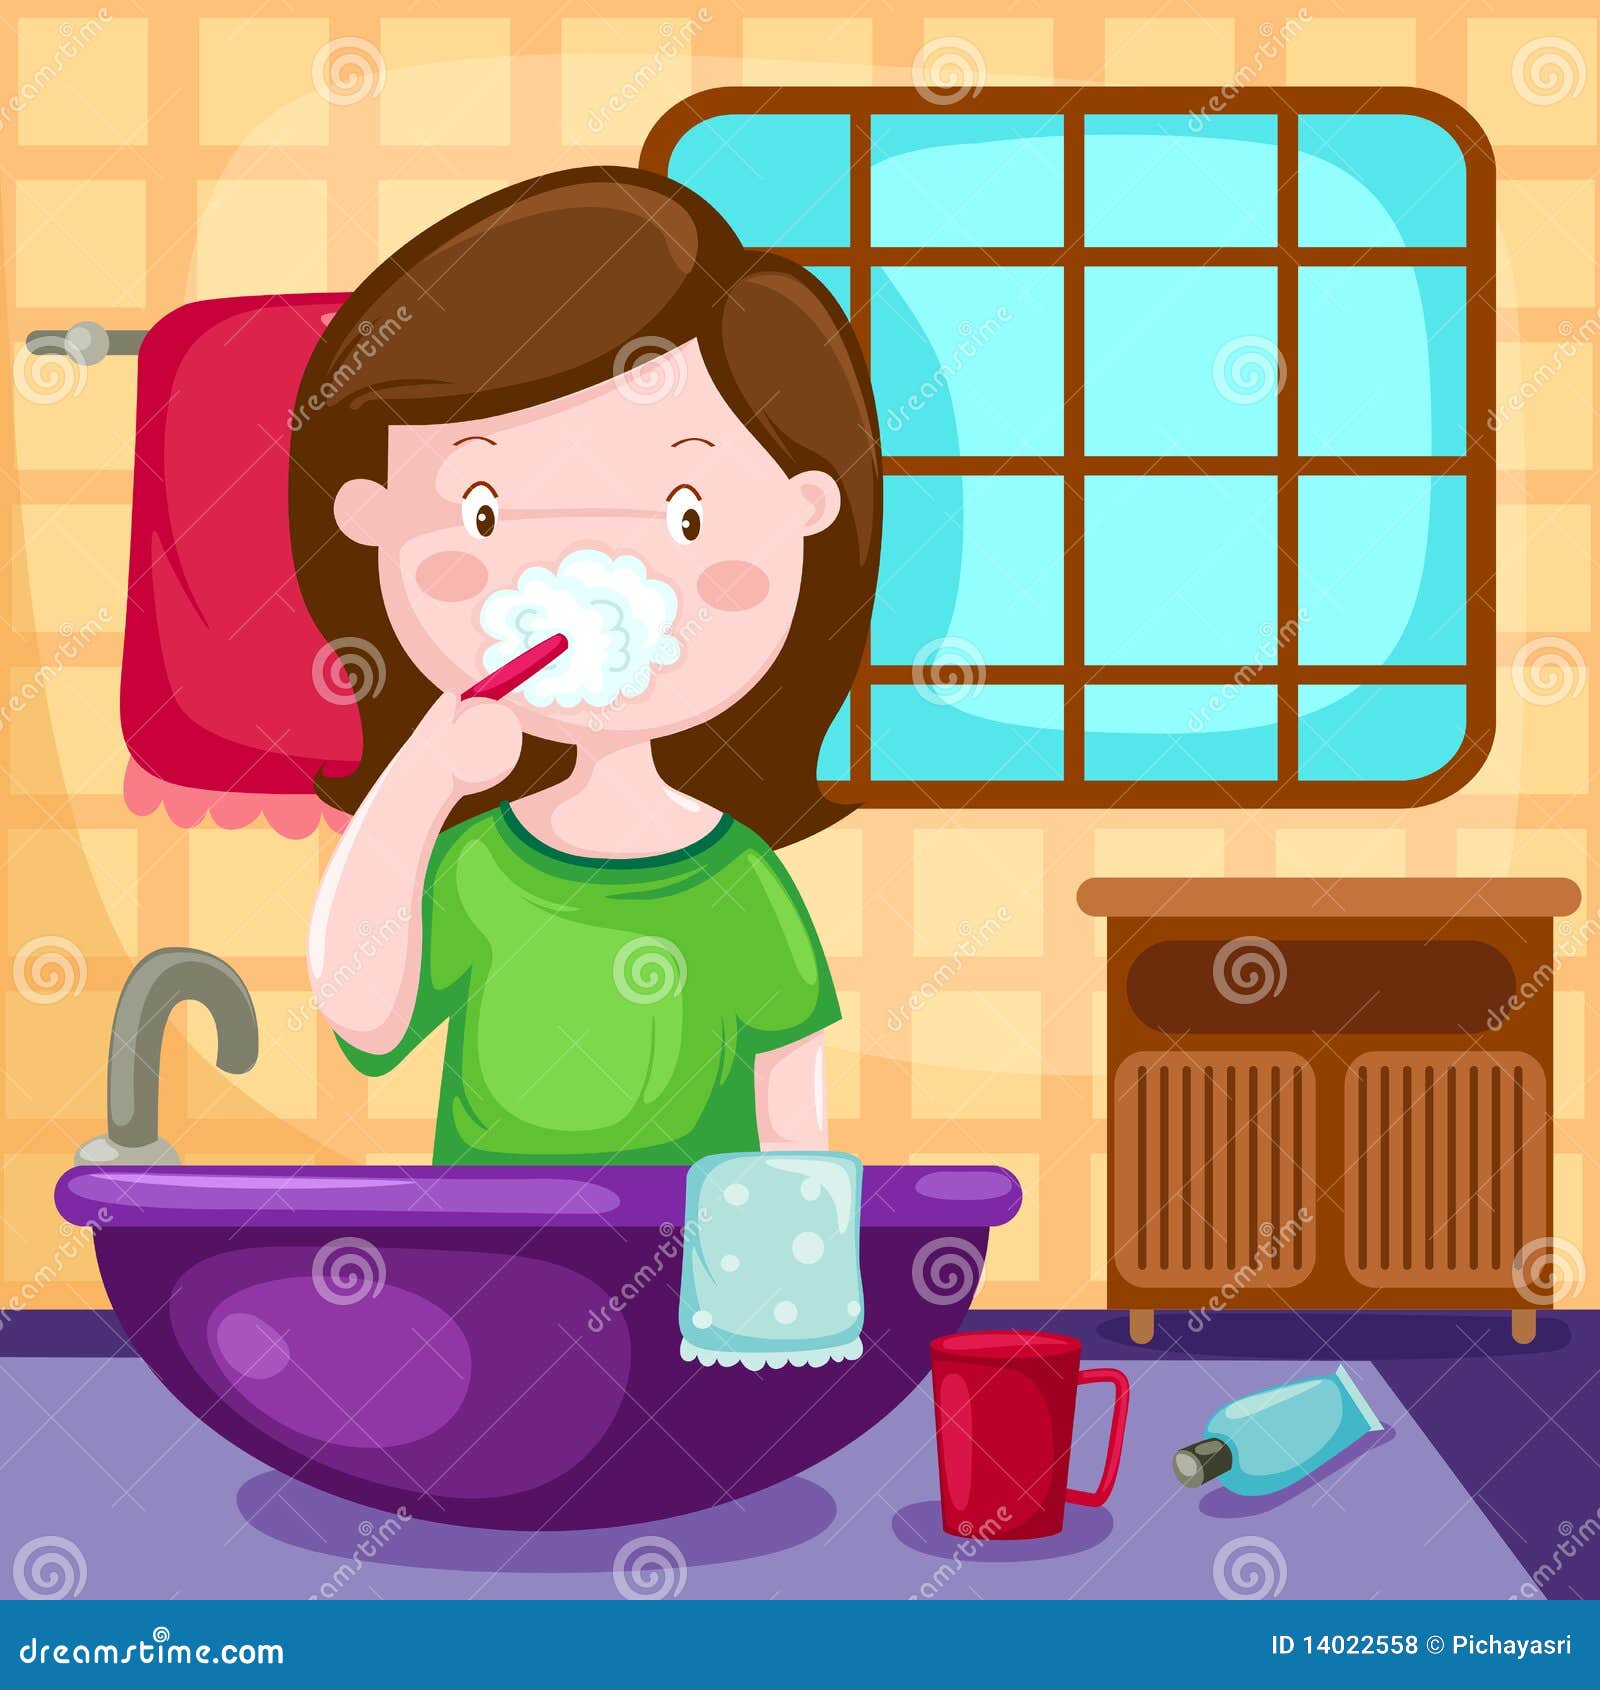 clipart girl brushing teeth - photo #36